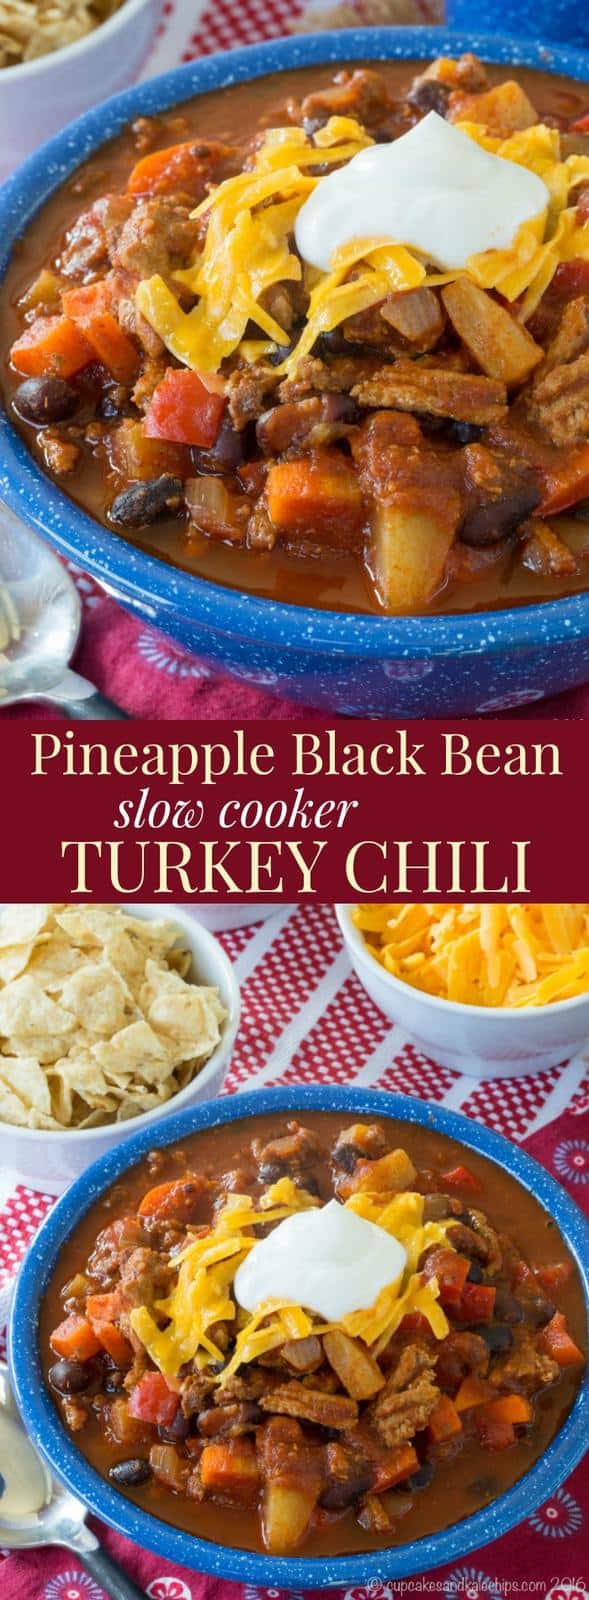 Pineapple Black Bean Slow Cooker Turkey Chili - Cupcakes ... - 589 x 1600 jpeg 109kB